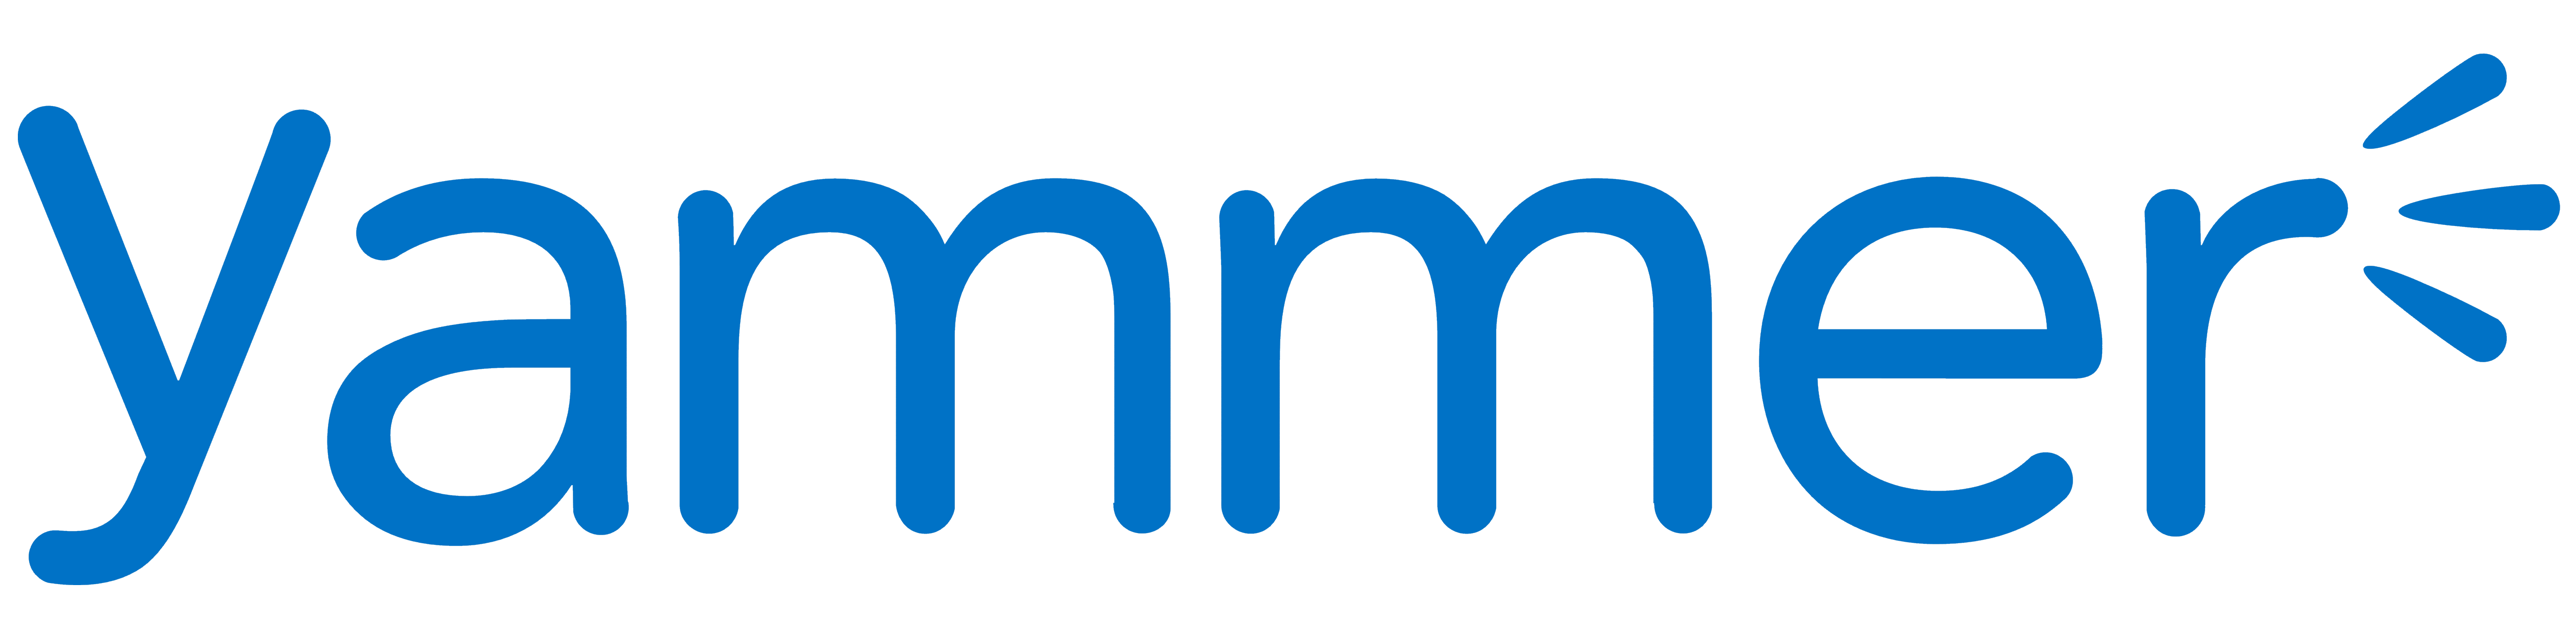 Yammer logo, logotype